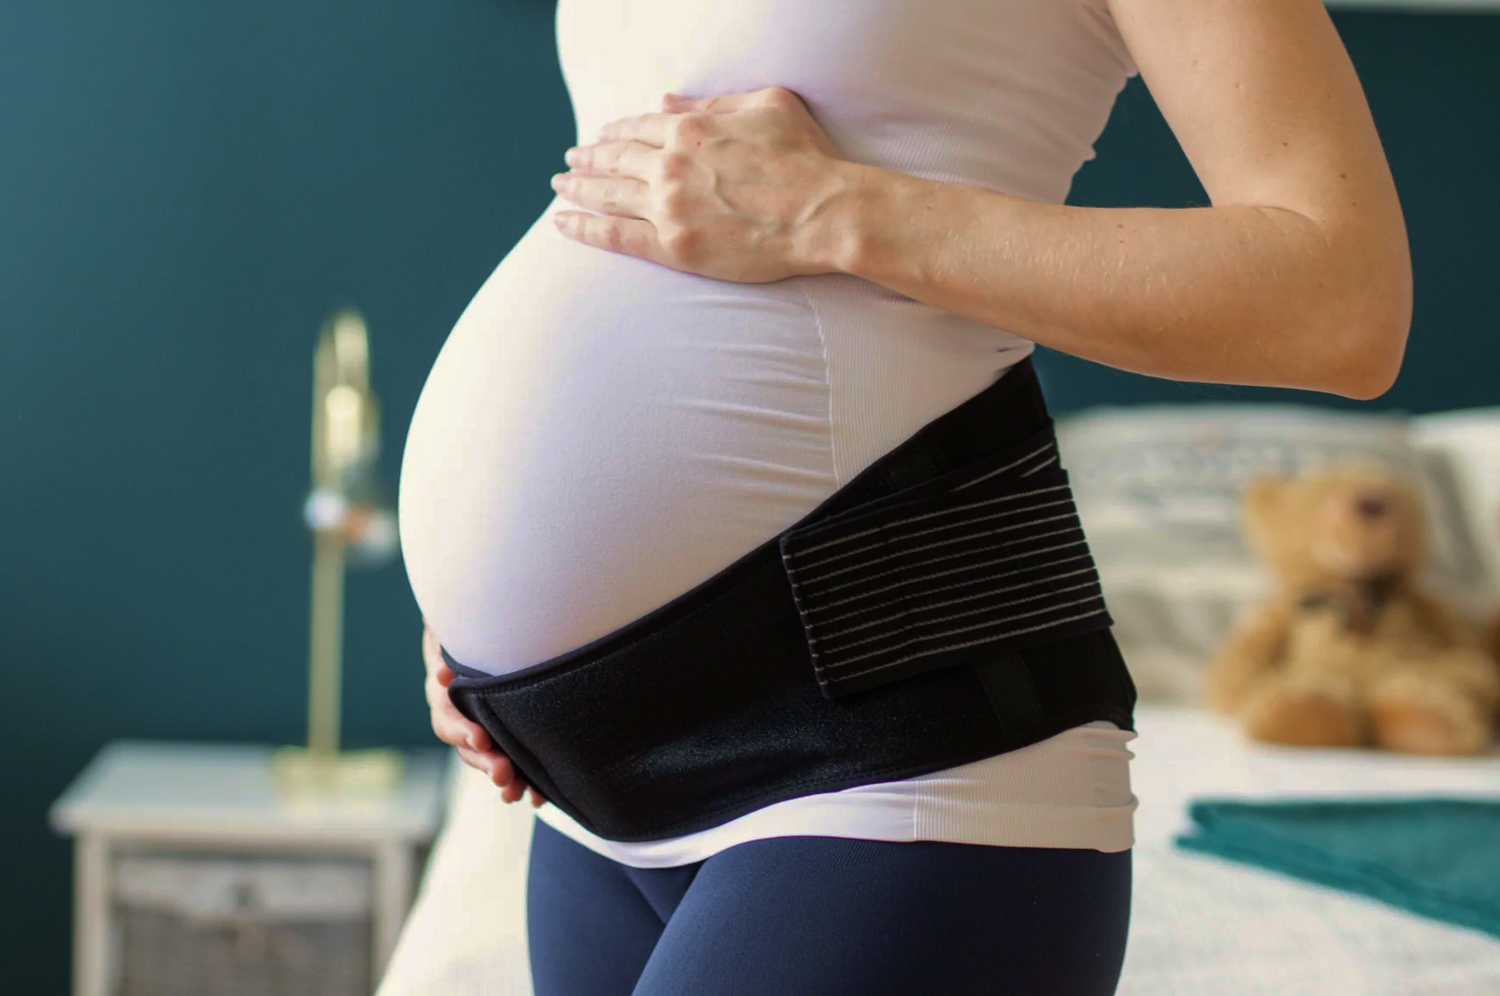 Pregnant mom uses pregnancy support belt